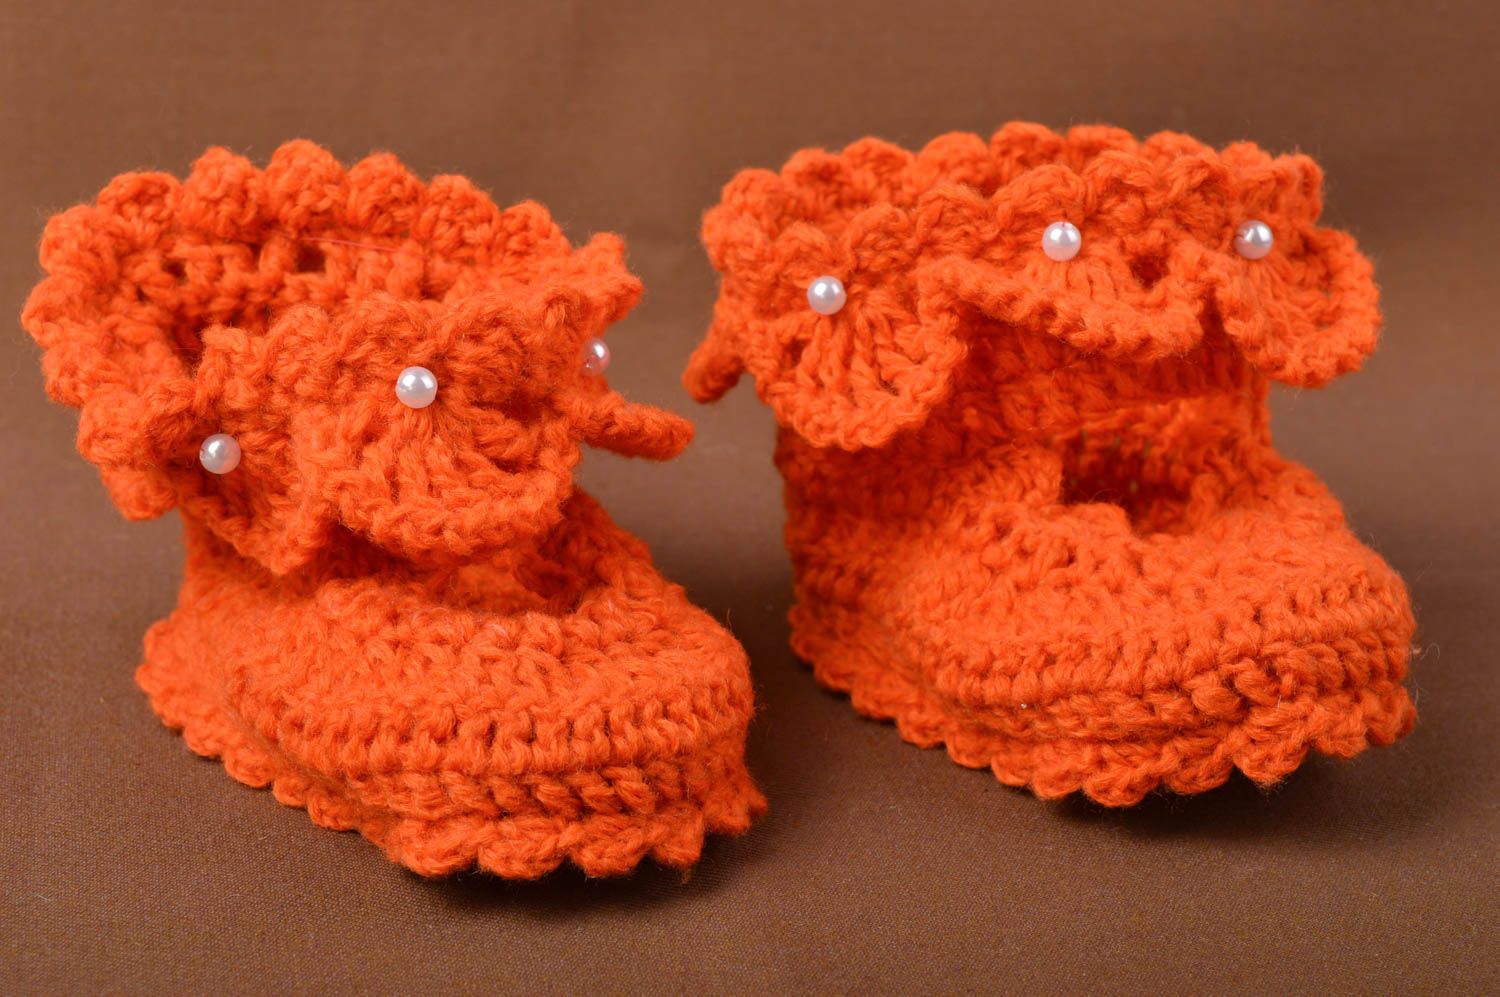 Handmade baby booties crocheted baby booties orange warm socks for kids photo 1